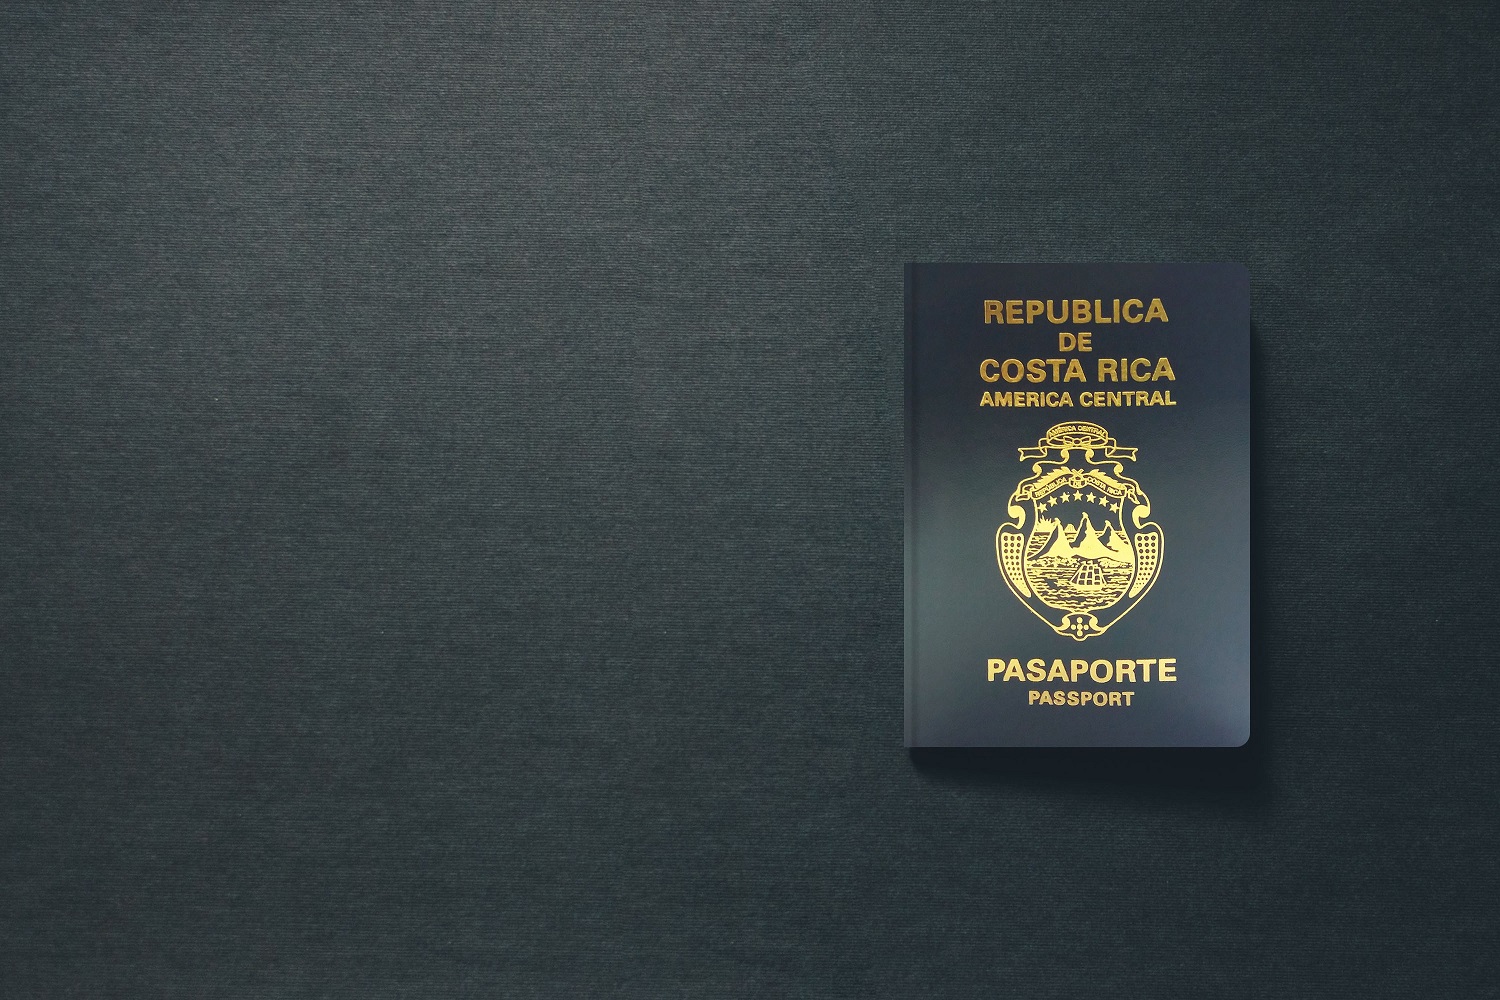 A Costa Rican passport against a dark background.